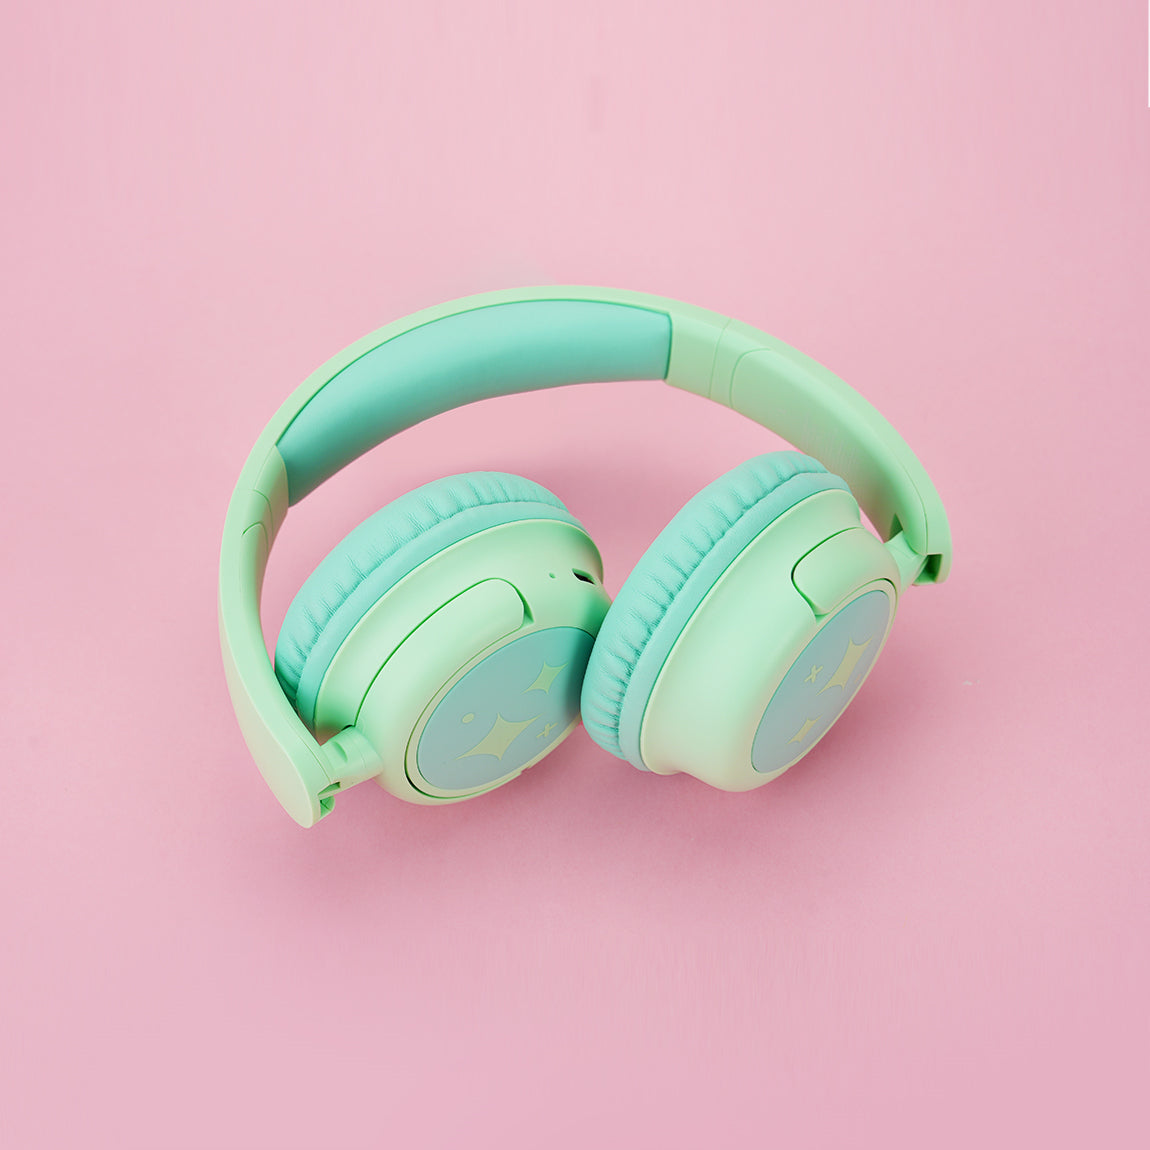 iClever Kids Bluetooth Headphones BTH22 (UK)